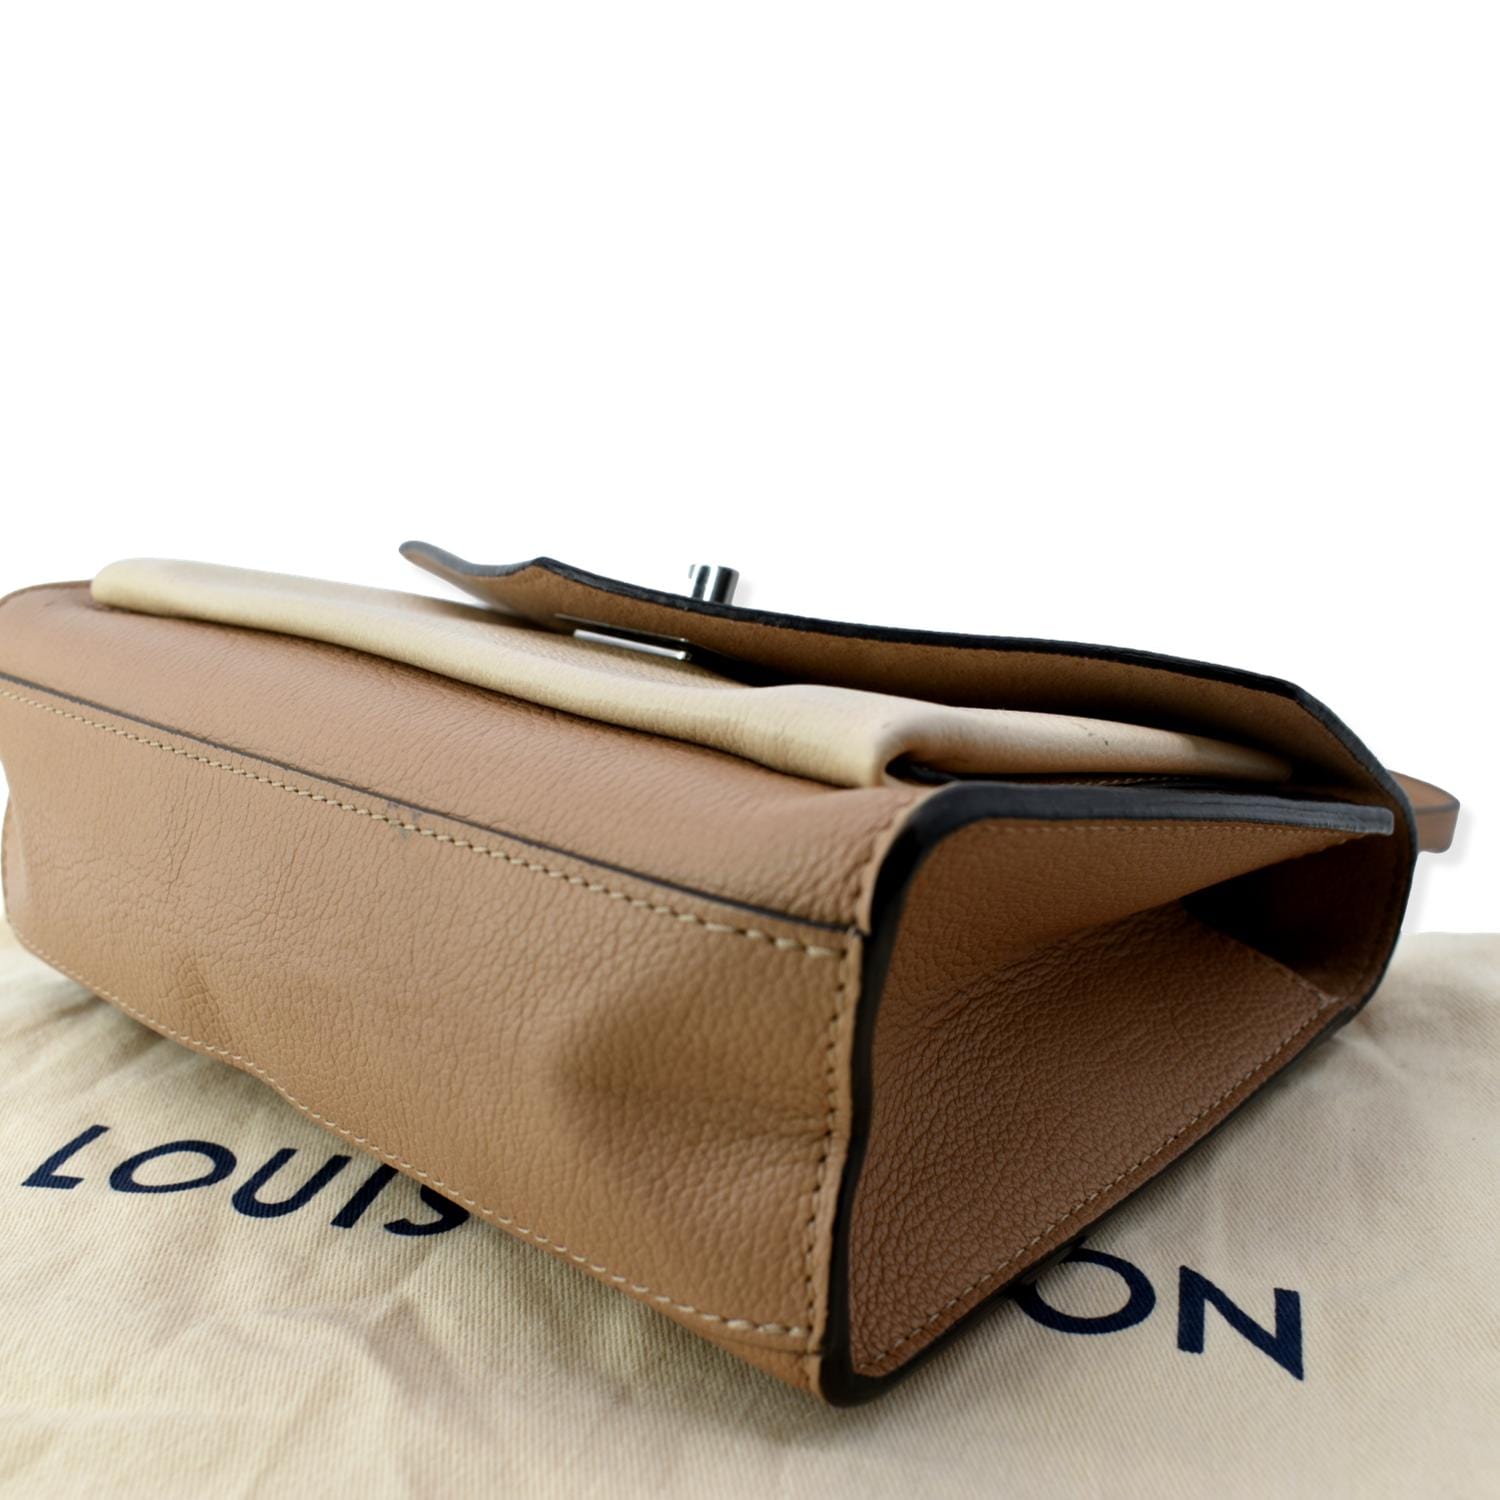 Mylockme leather handbag Louis Vuitton Black in Leather - 33643616